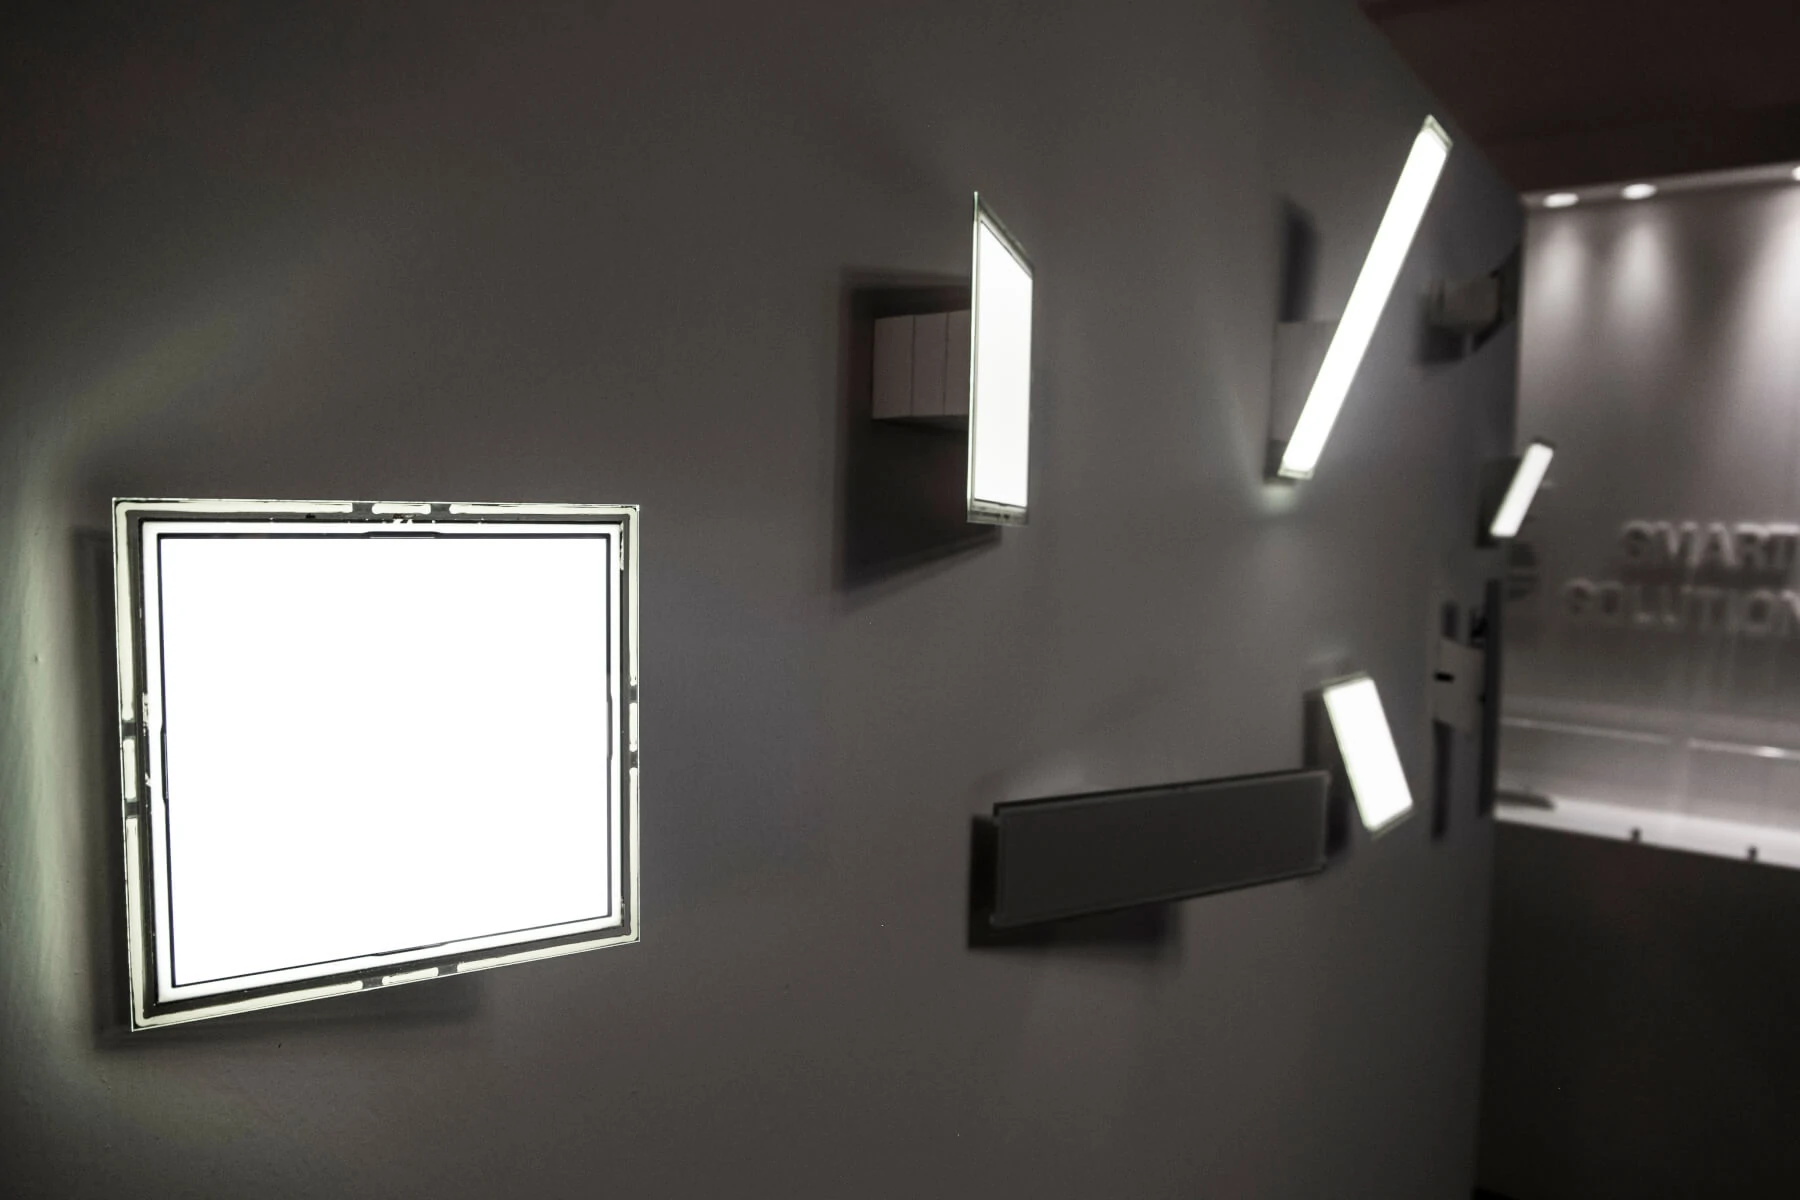 Arditi spa booth at Euroluce showing LumiBlade OLED panels